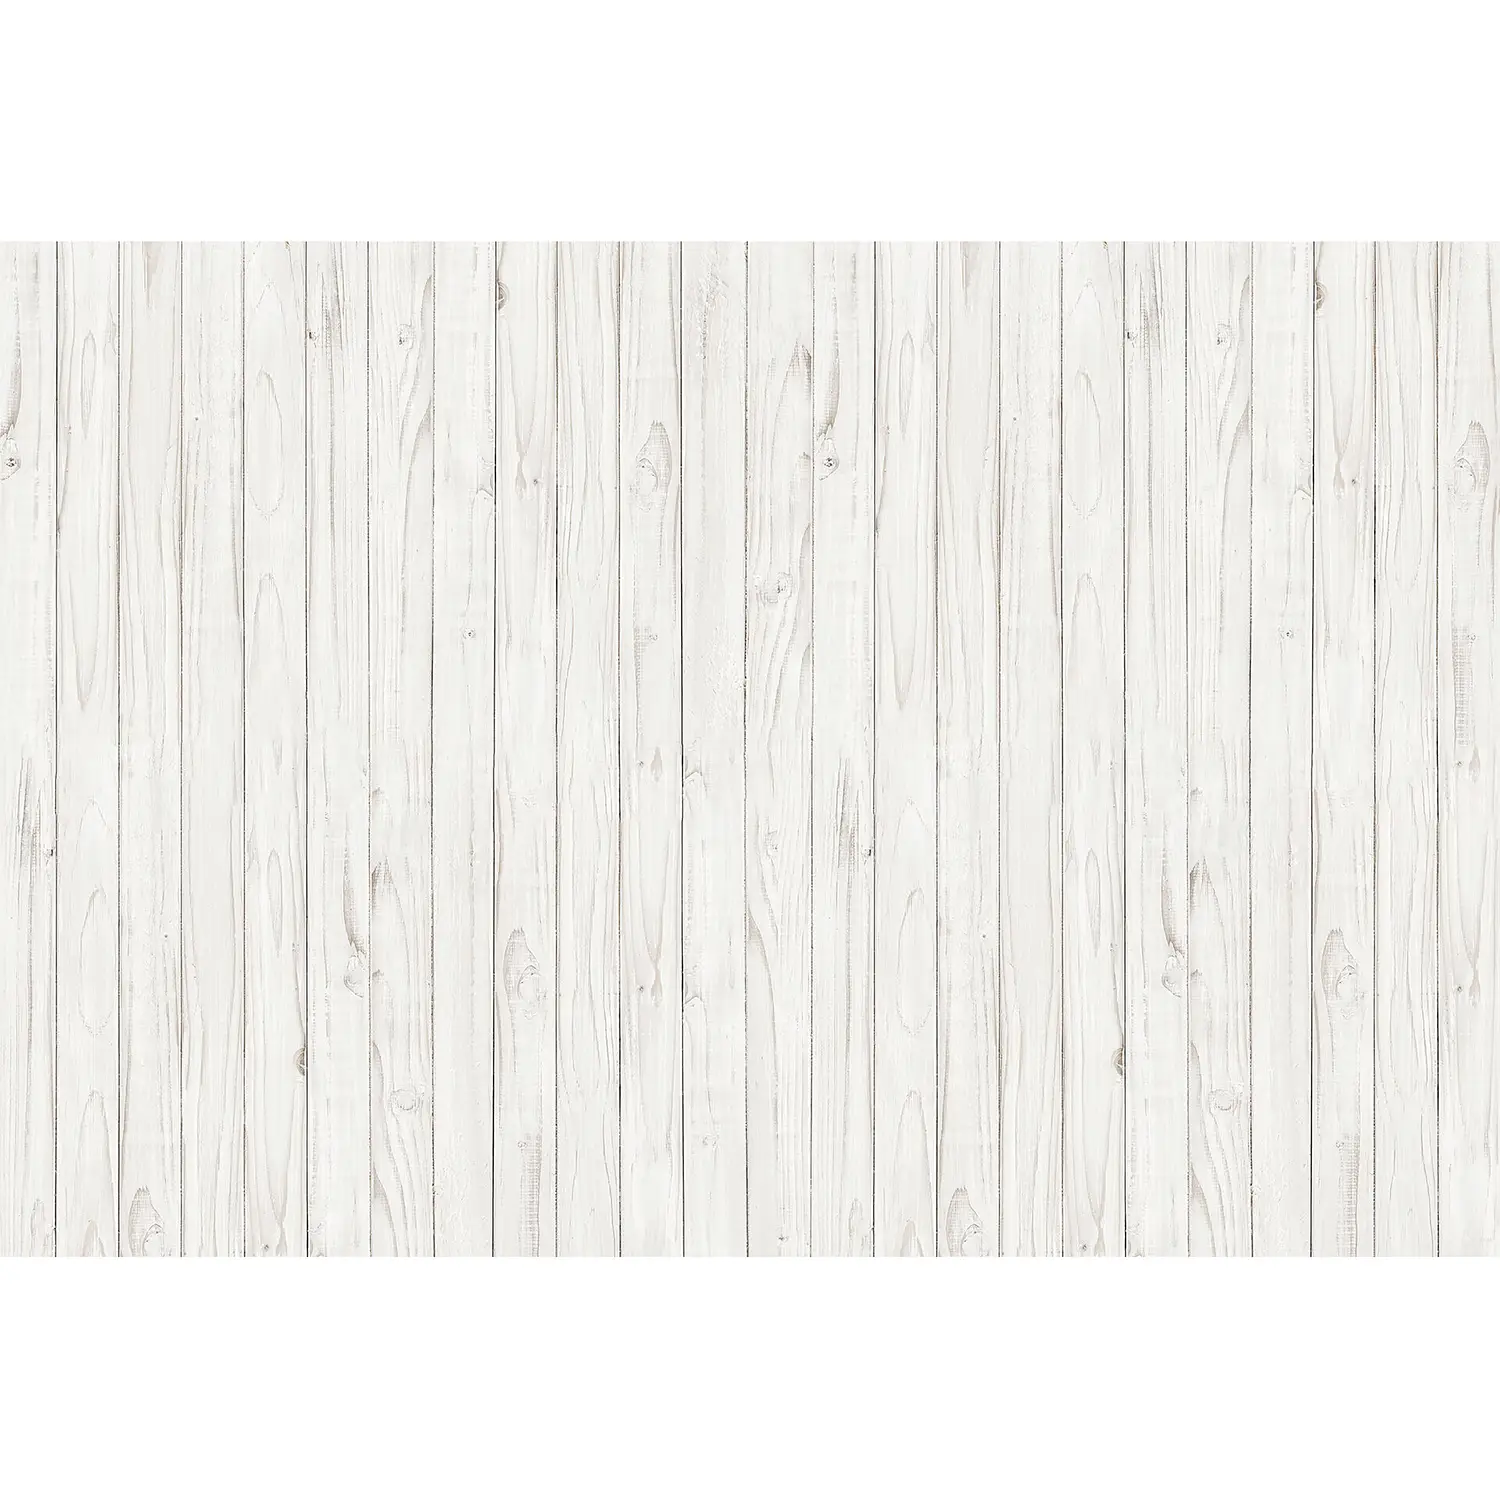 White Wooden Fototapete Wall